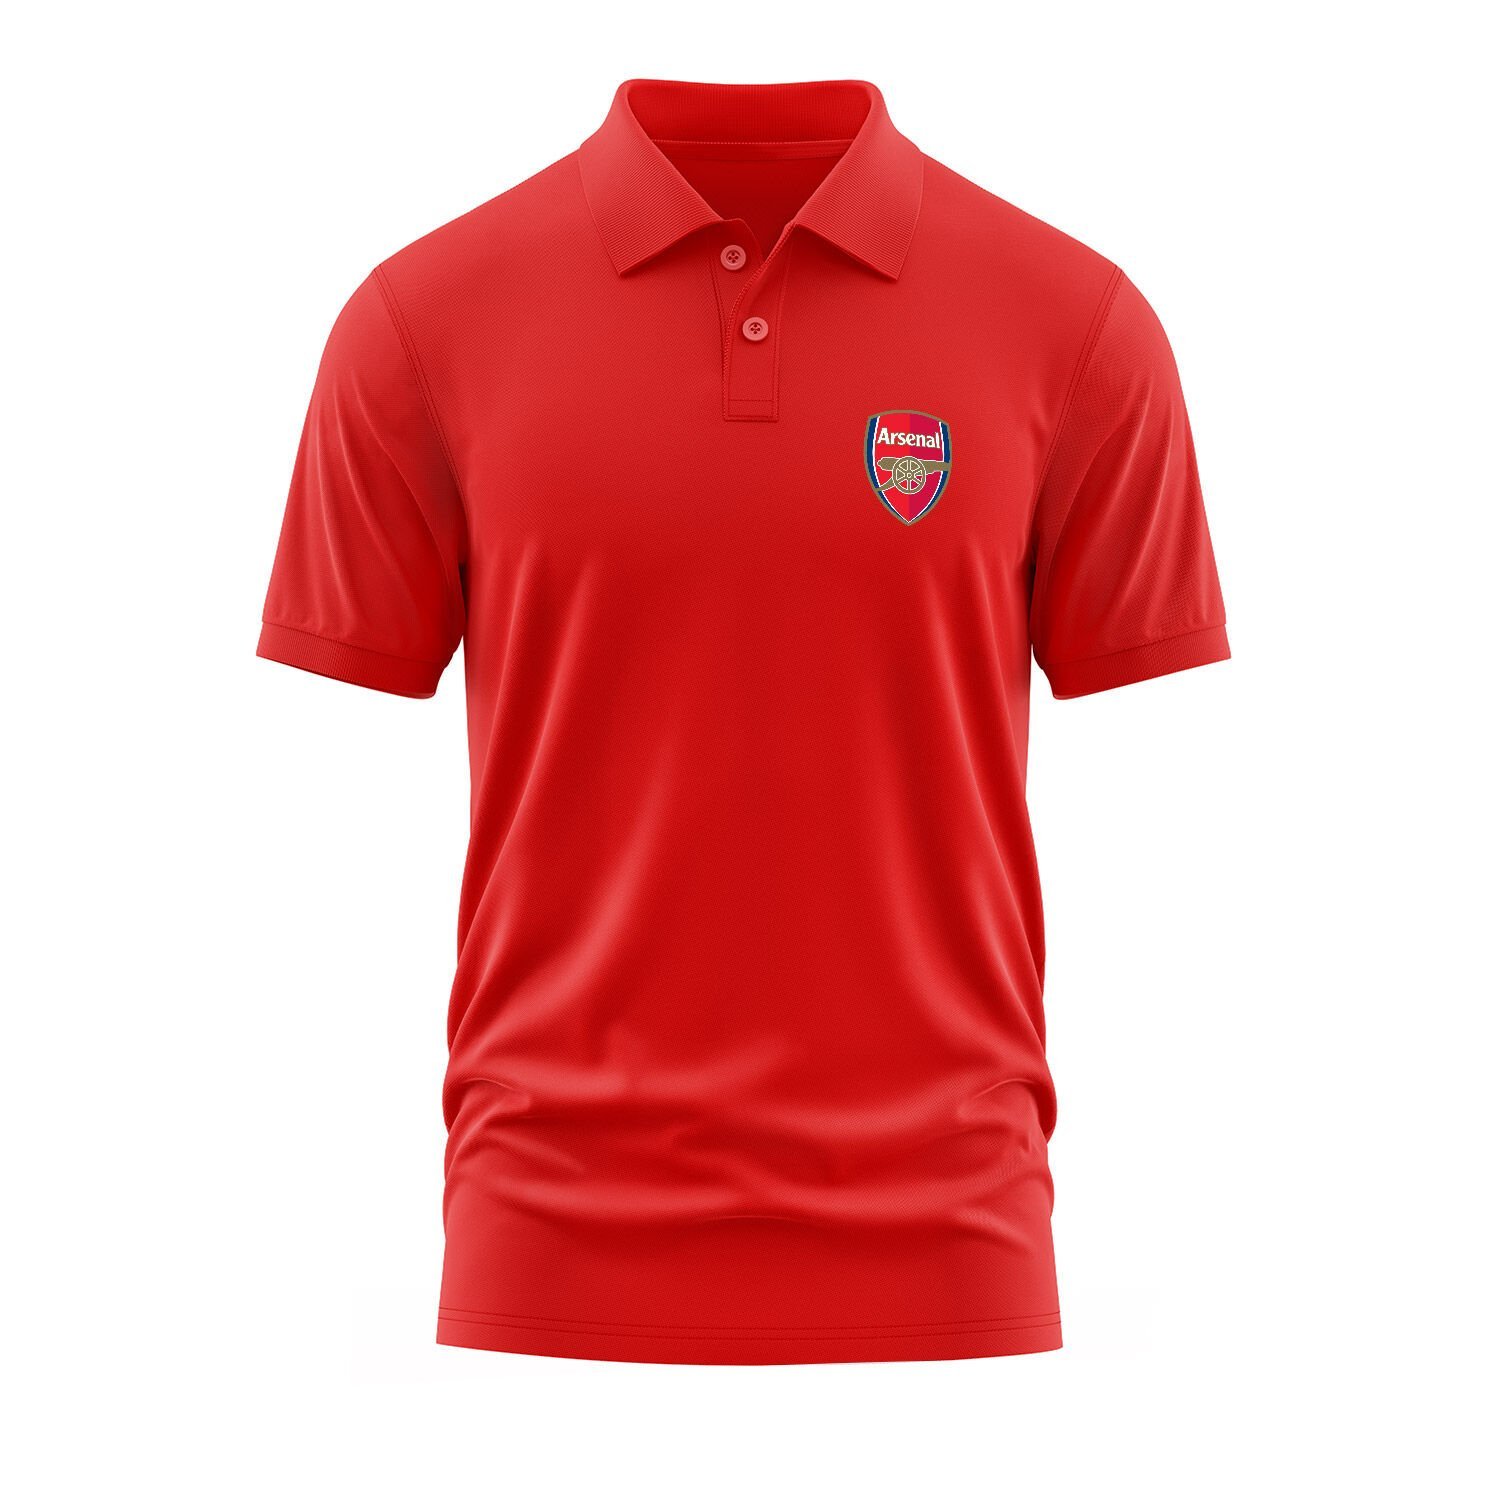 Arsenal Kırmızı Polo Tişört